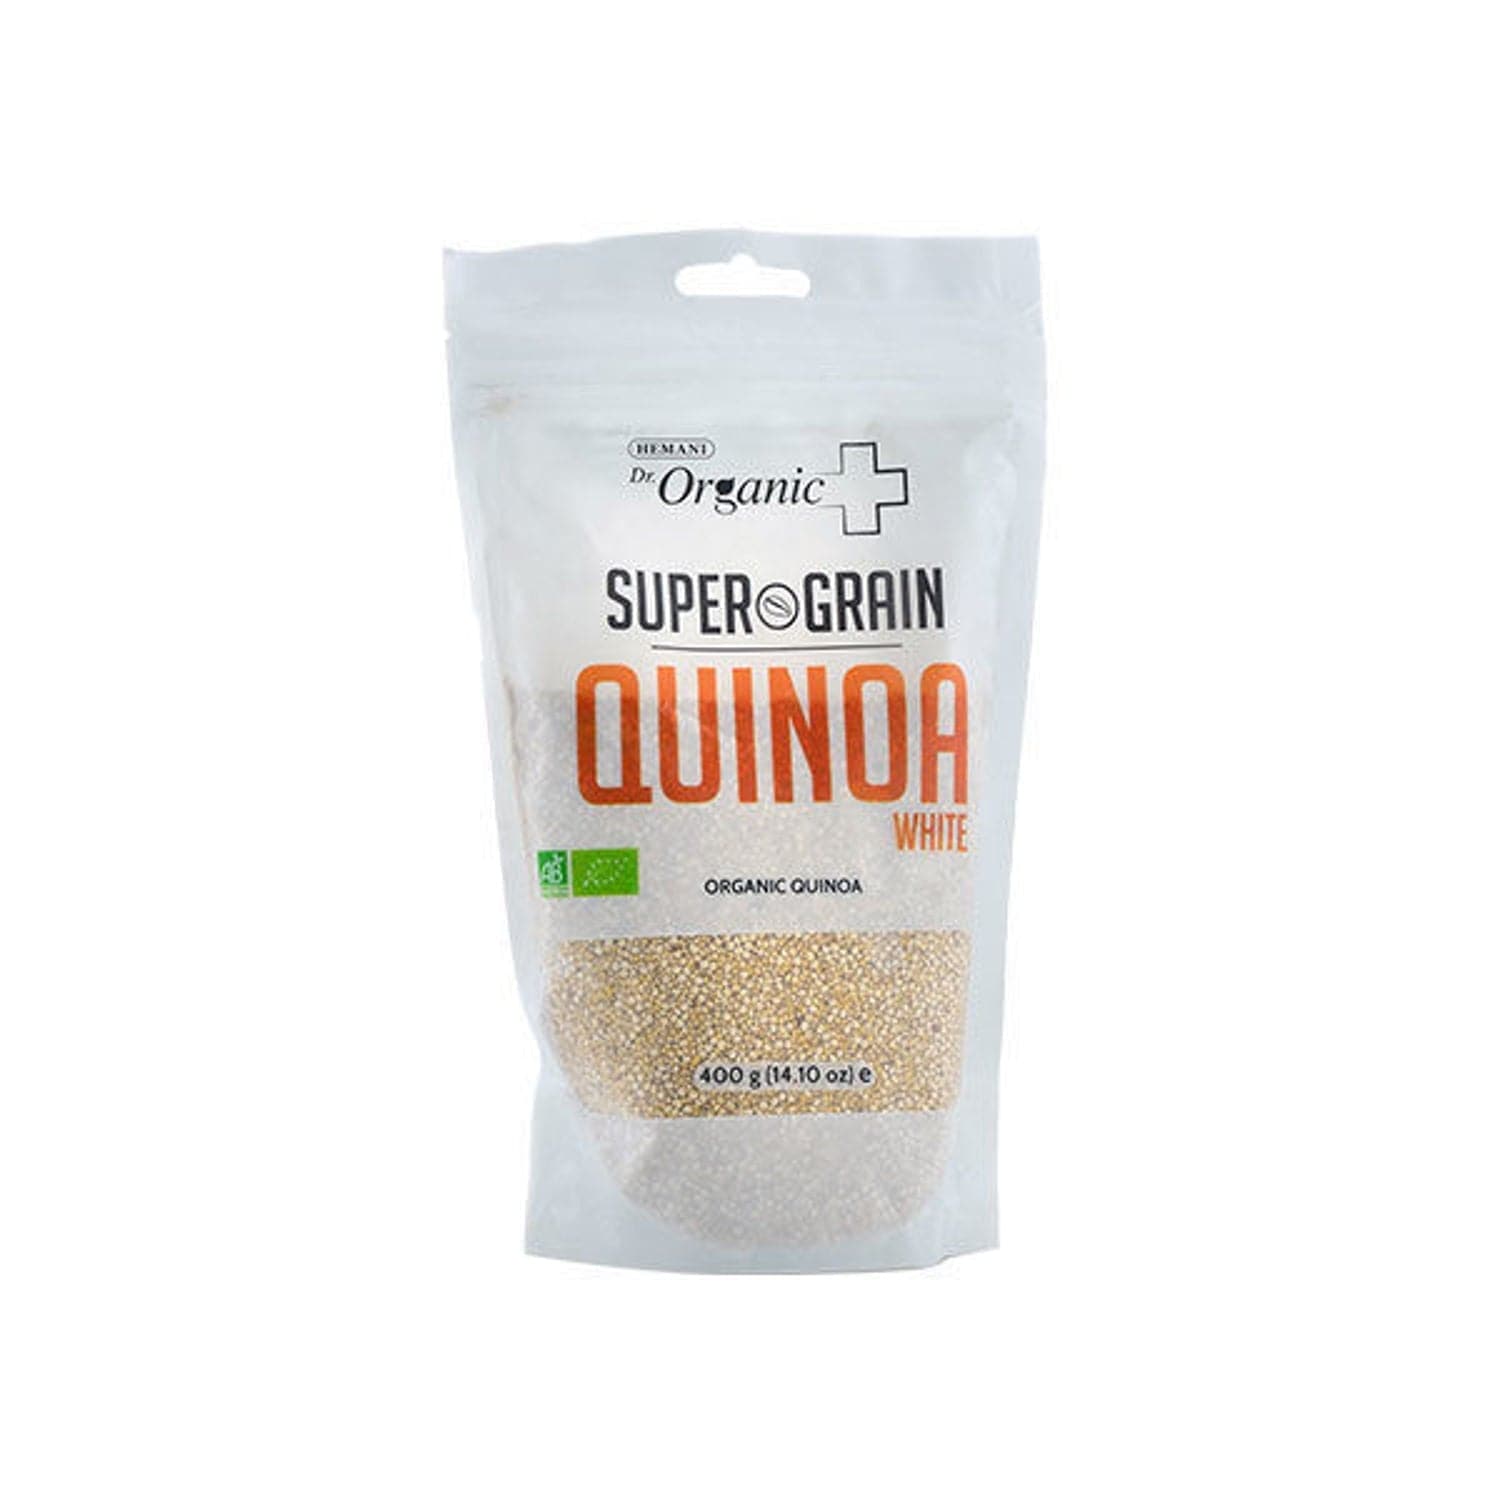 Dr. Organic Superfood - Quinoa - Premium  from Hemani - Just Rs 925.00! Shop now at Cozmetica